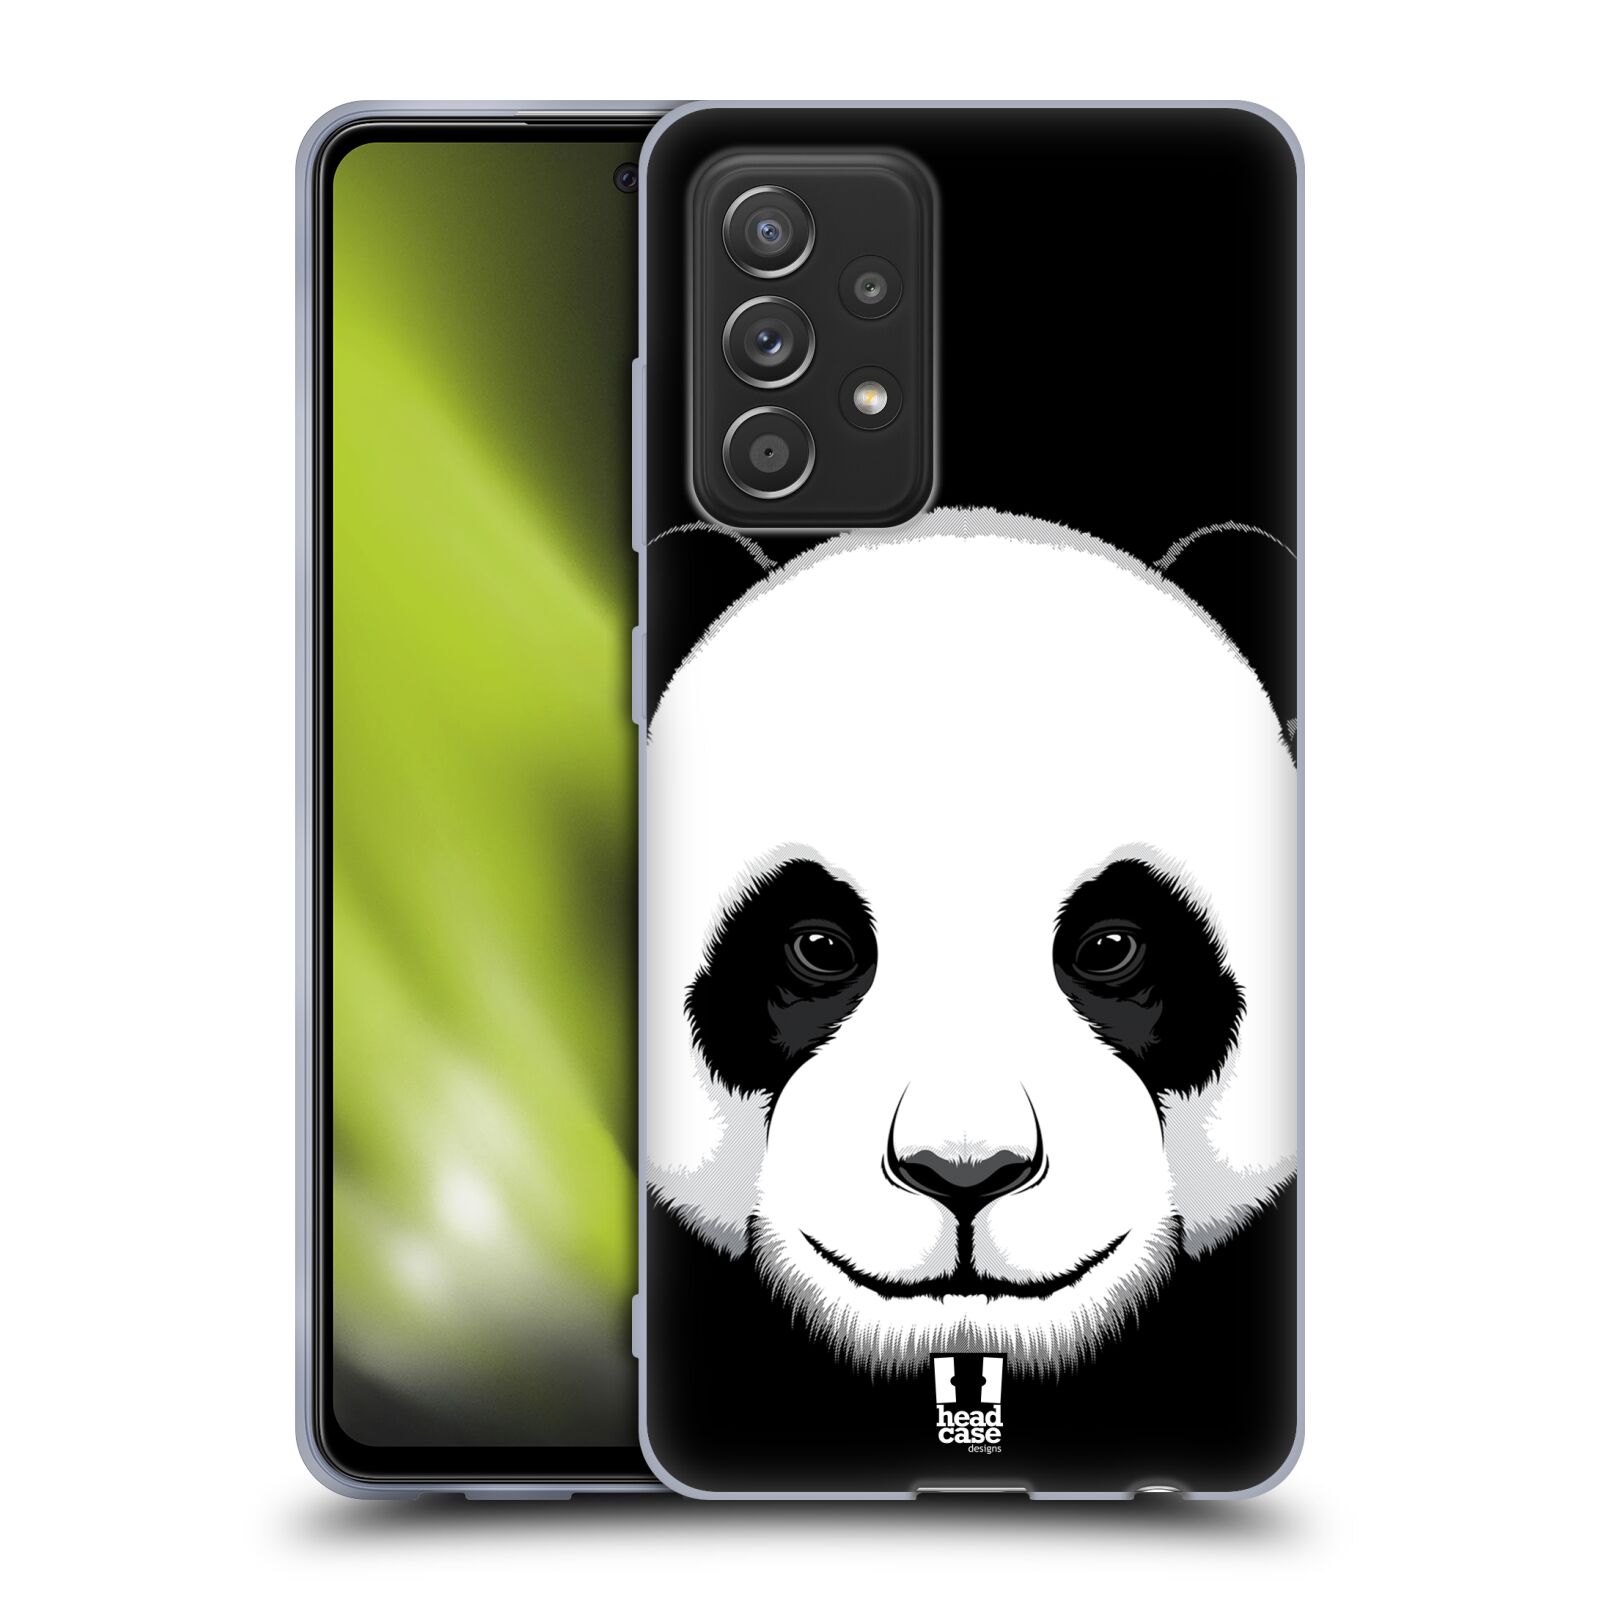 Plastový obal HEAD CASE na mobil Samsung Galaxy A52 / A52 5G / A52s 5G vzor Zvíře kreslená tvář panda